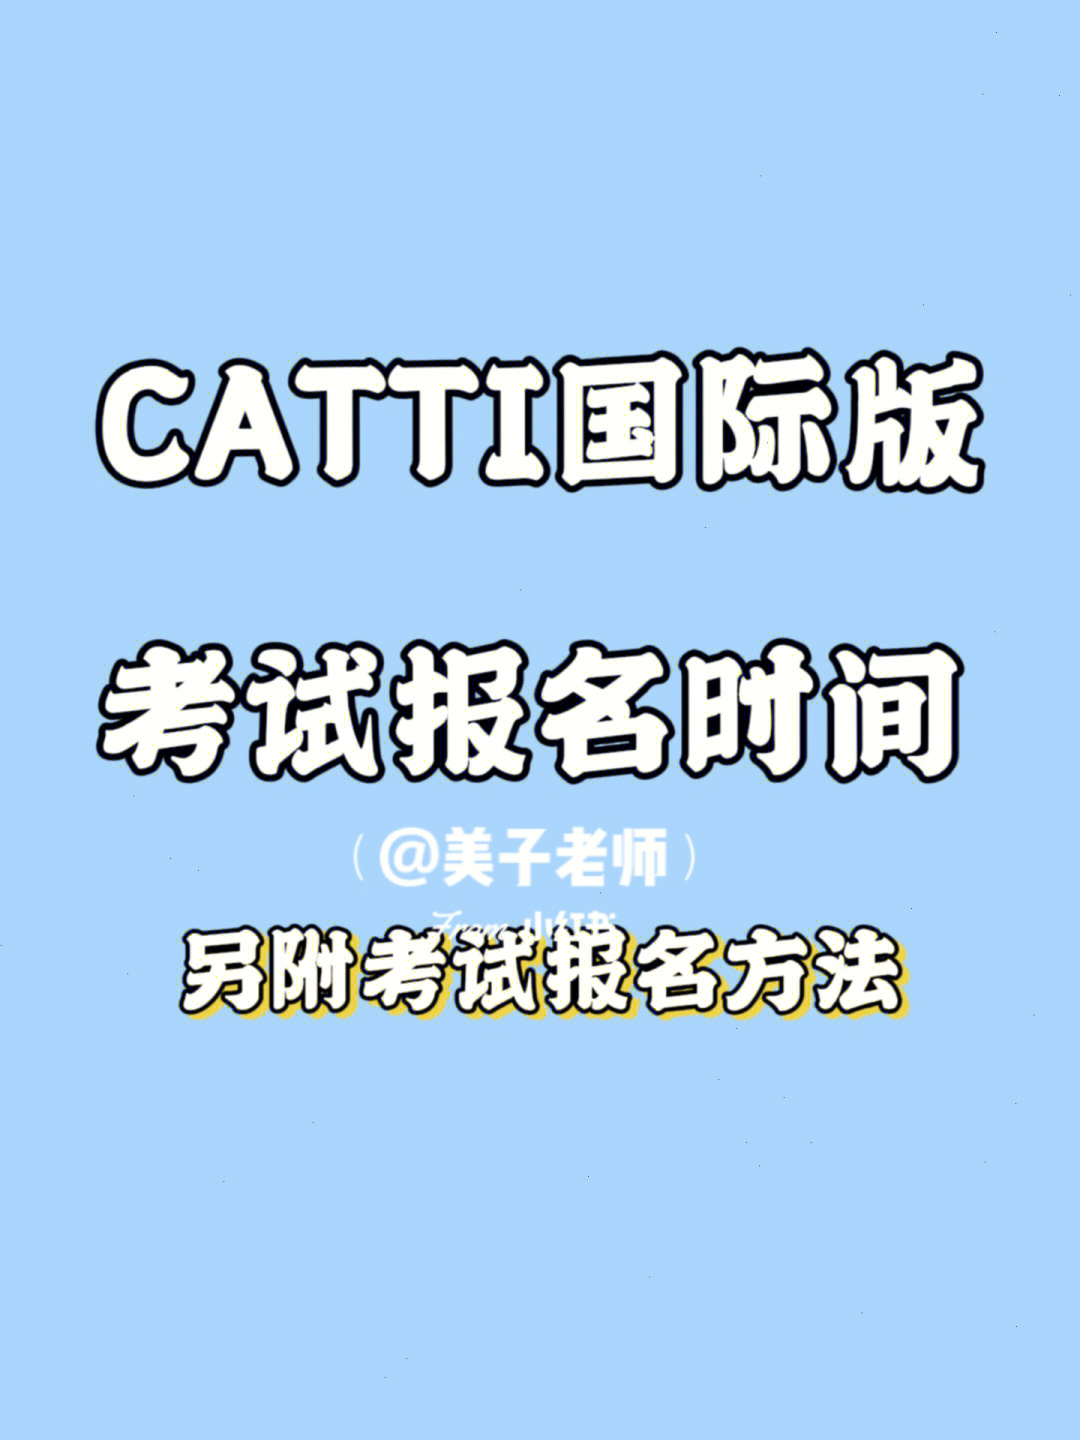 catti国际版考试报名时间3月1日 9:00 ~ 4月30日 17:00(北京时间)考试